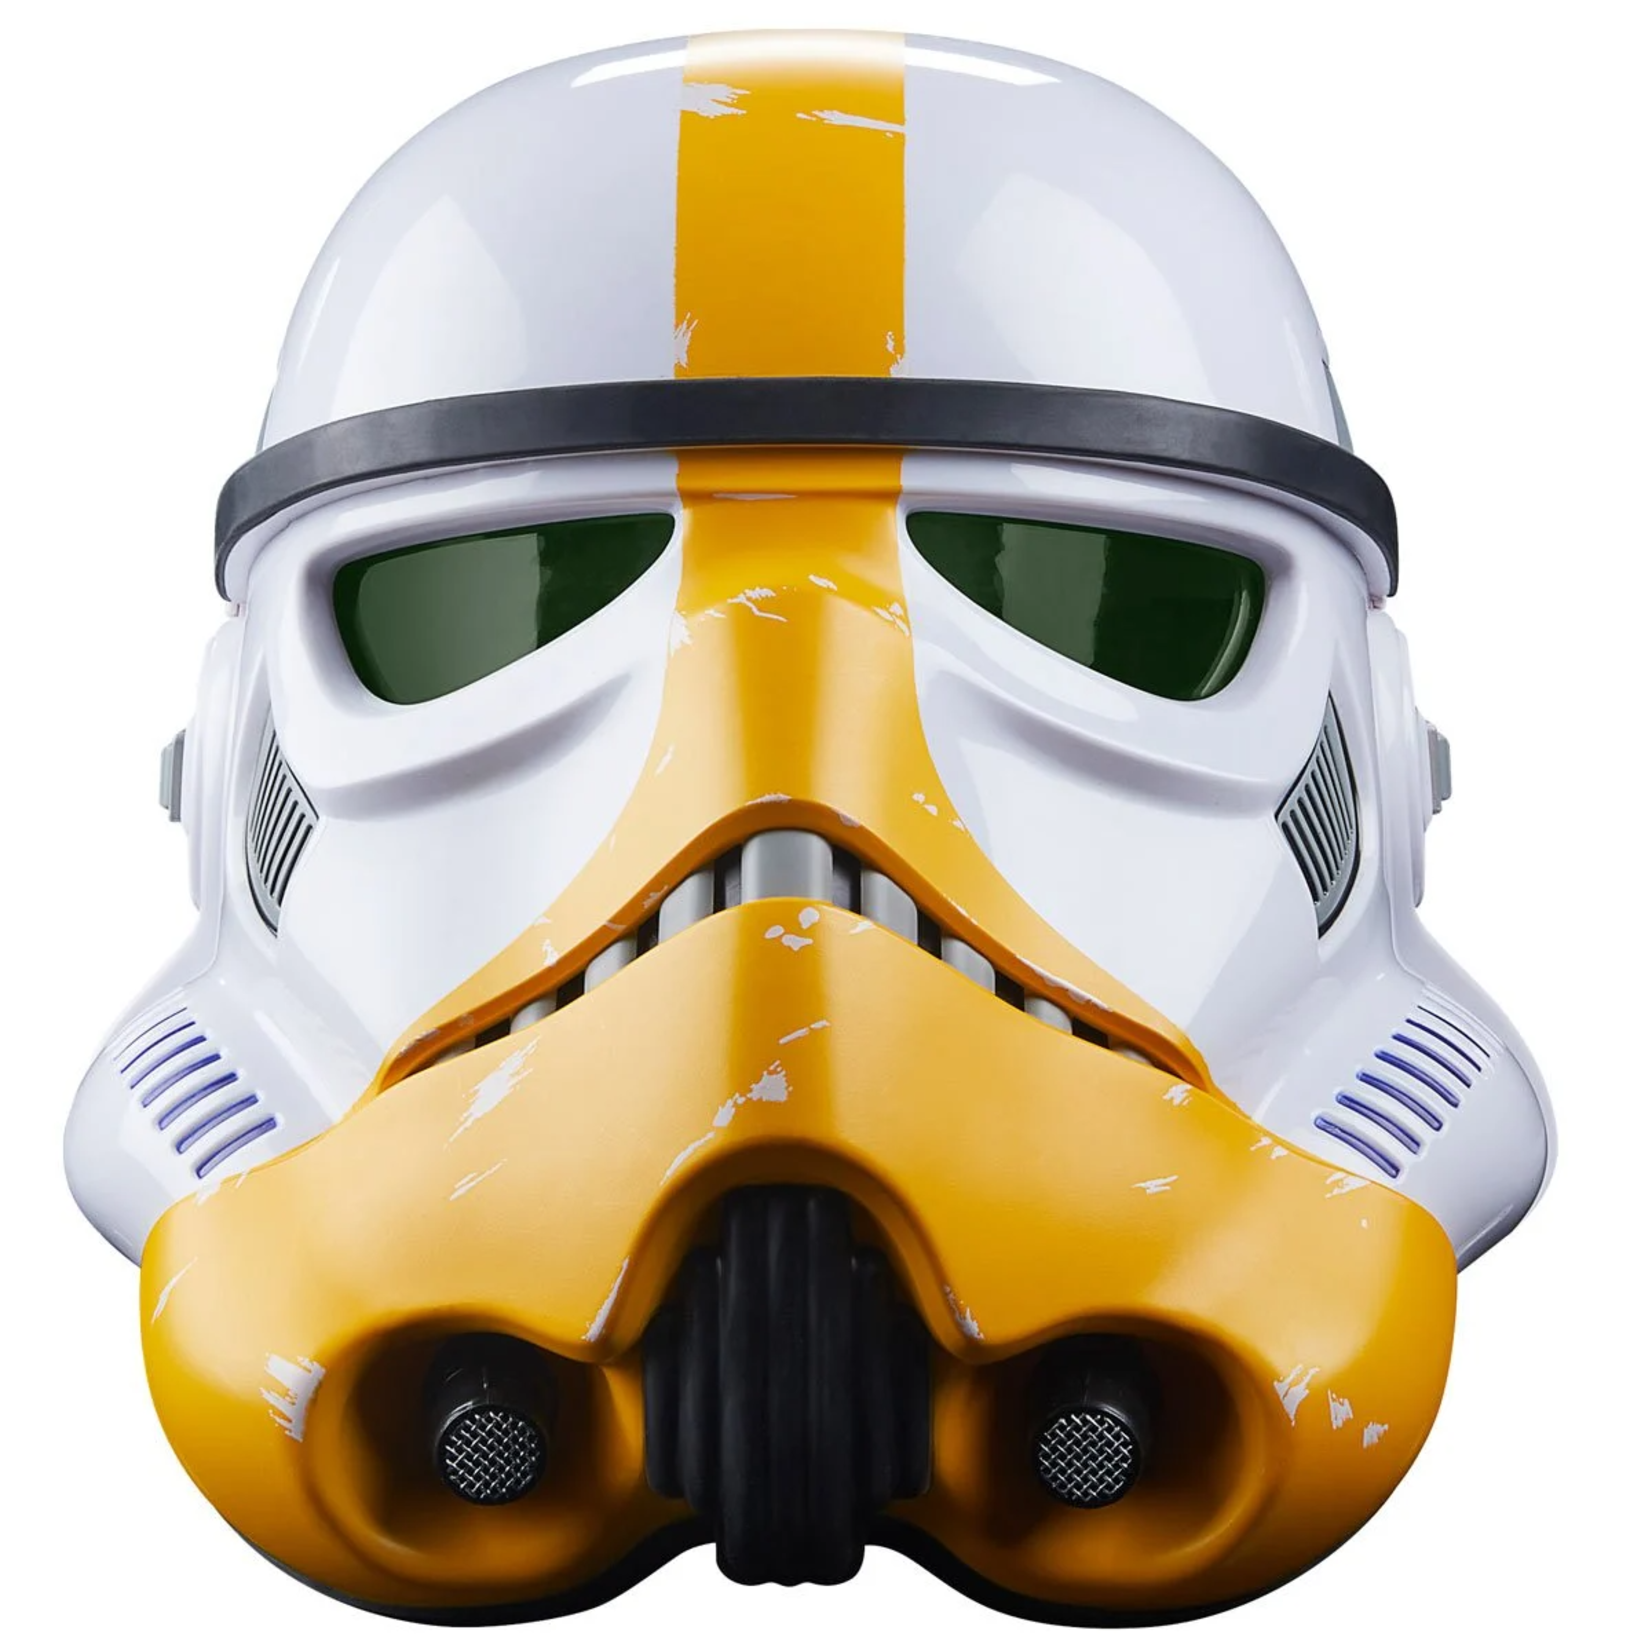 Star Wars The Black Series The Mandalorian Artillery Stormtrooper Premium Electronic Helmet